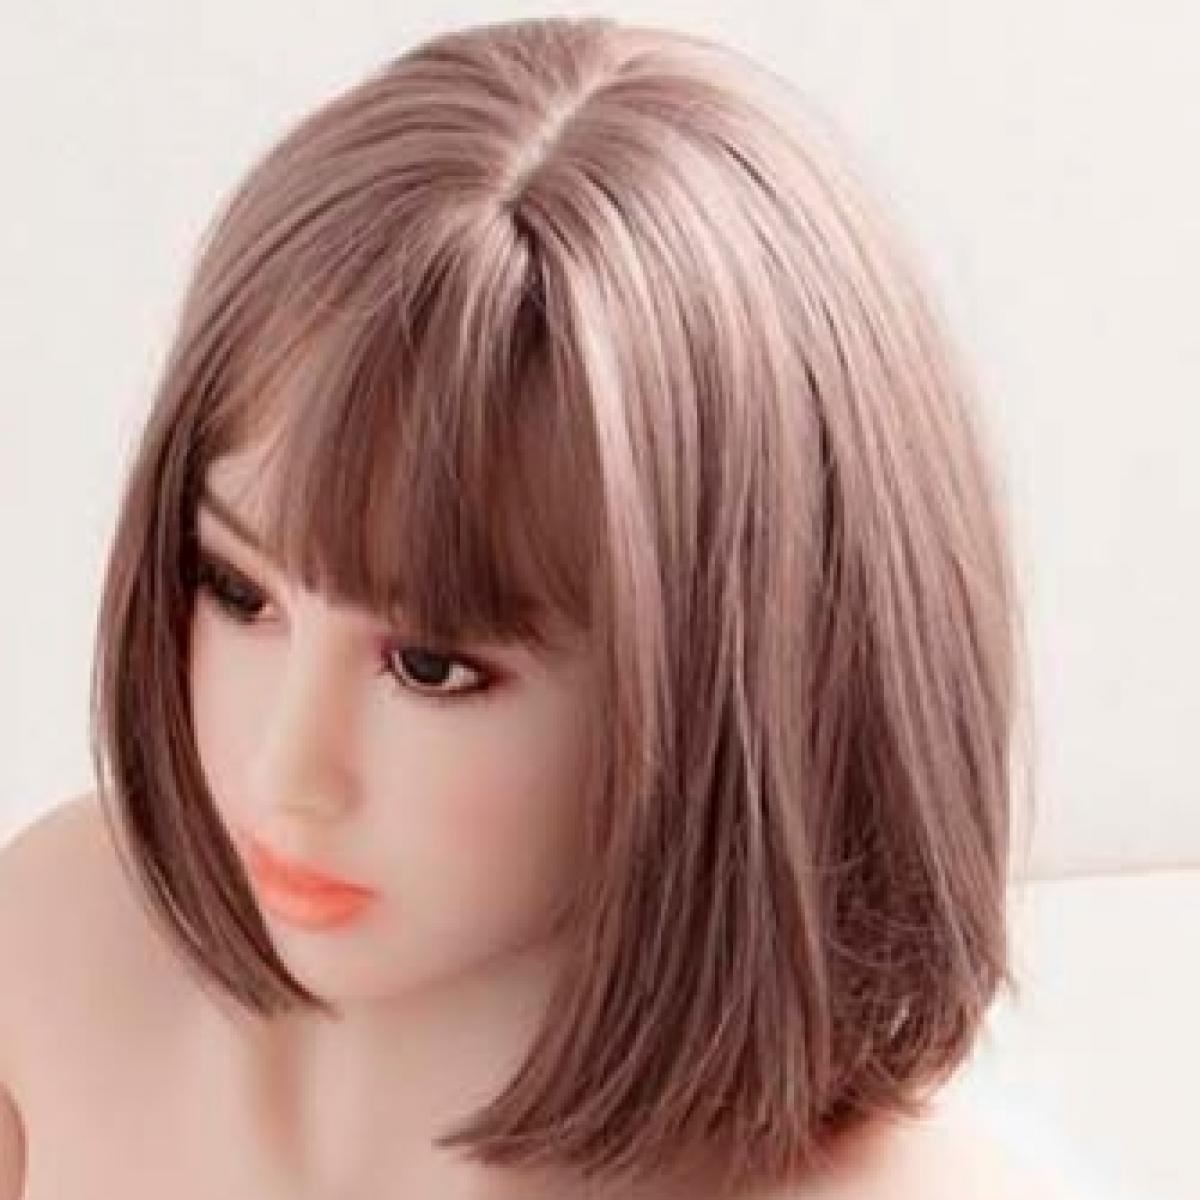 Firedoll - Jada - Sex Doll Head - M16 Compatible - Natural